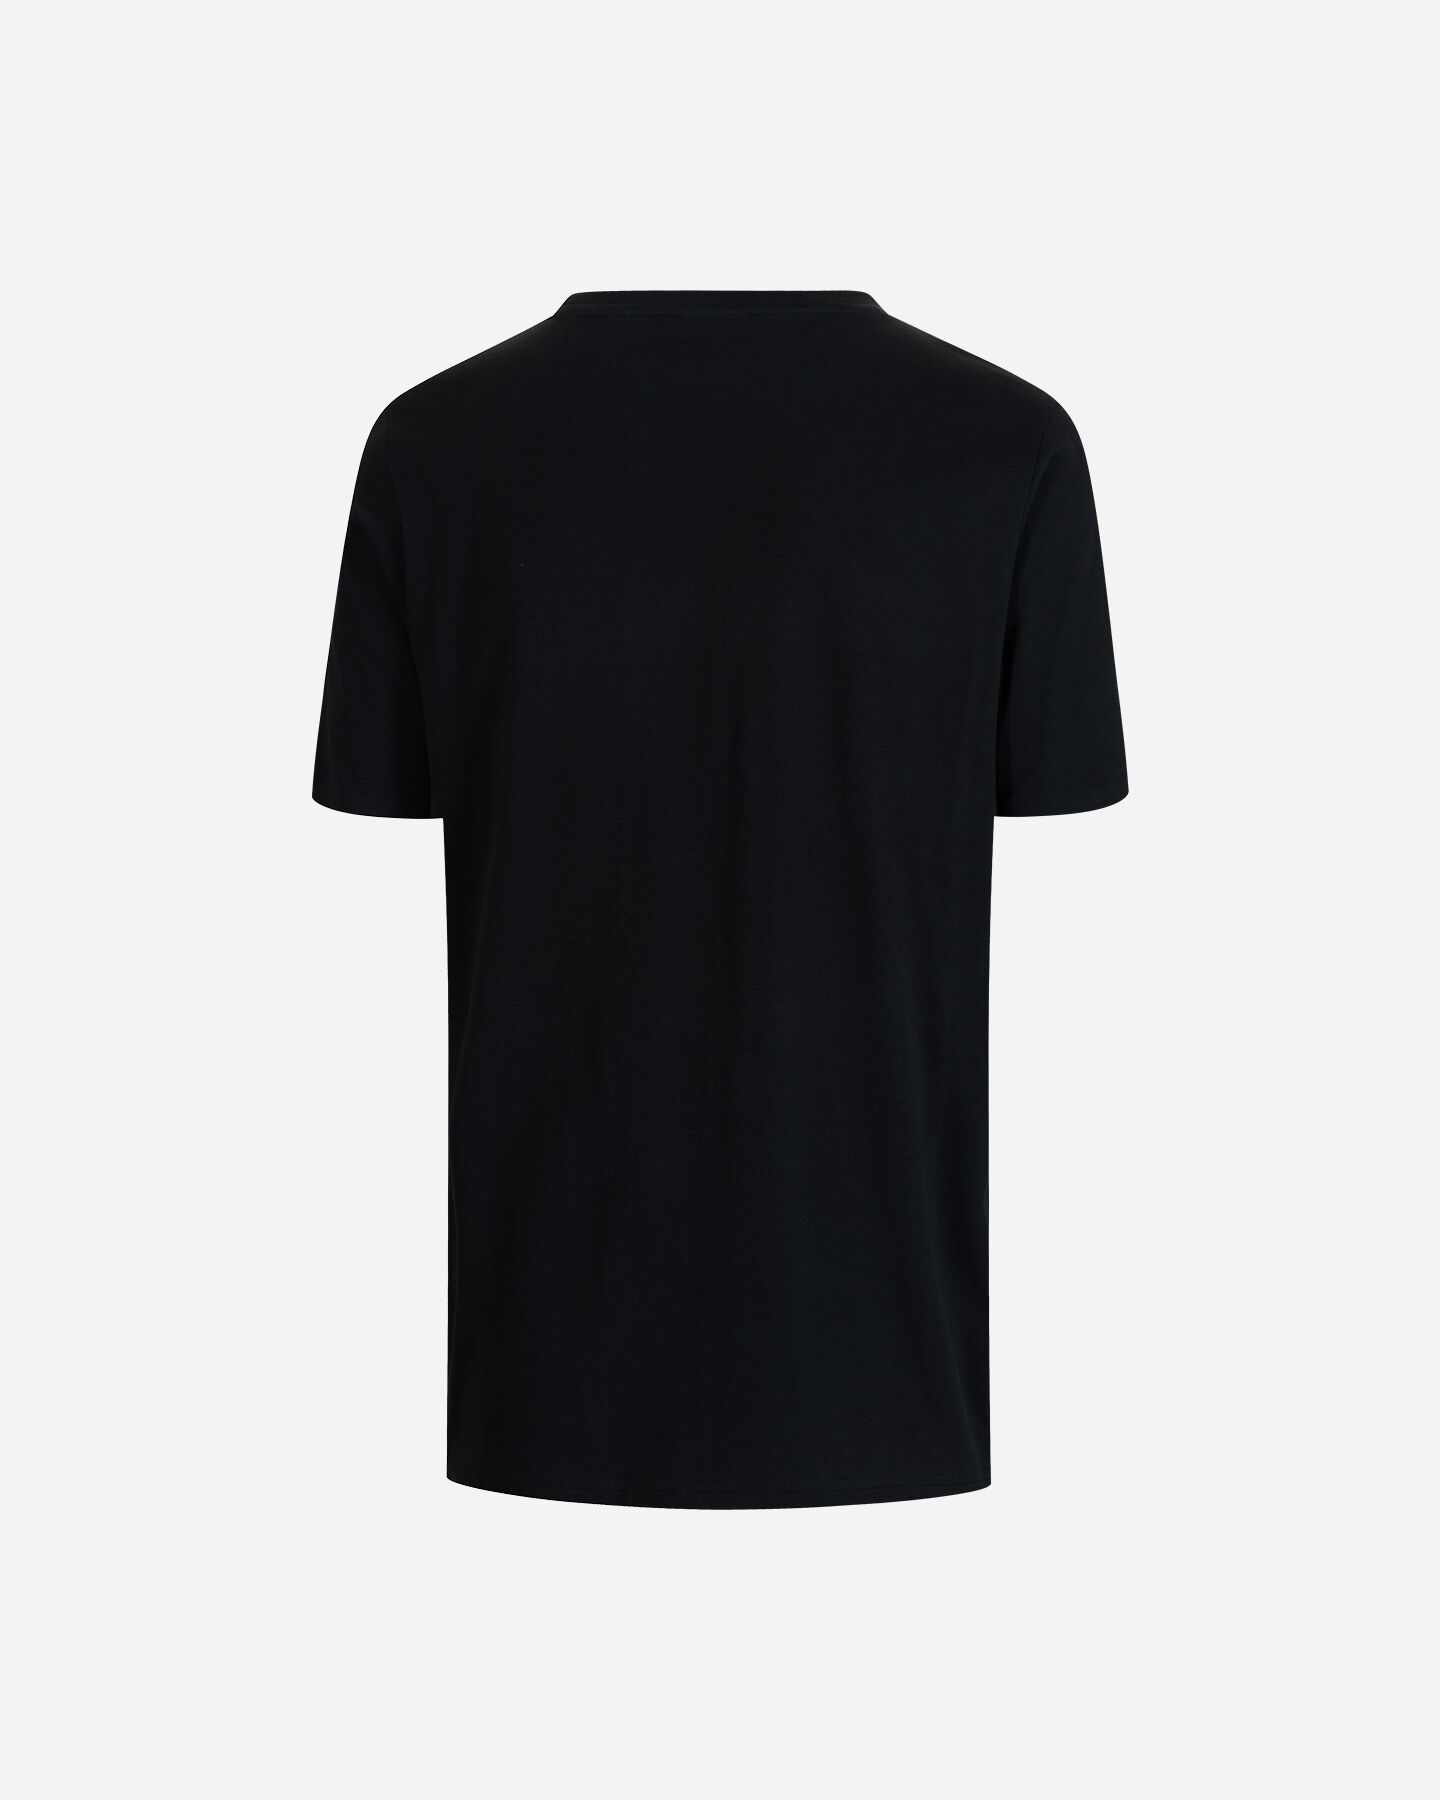  T-Shirt BEAR STREETWEAR URBAN STYLE M S4126731|050|S scatto 1